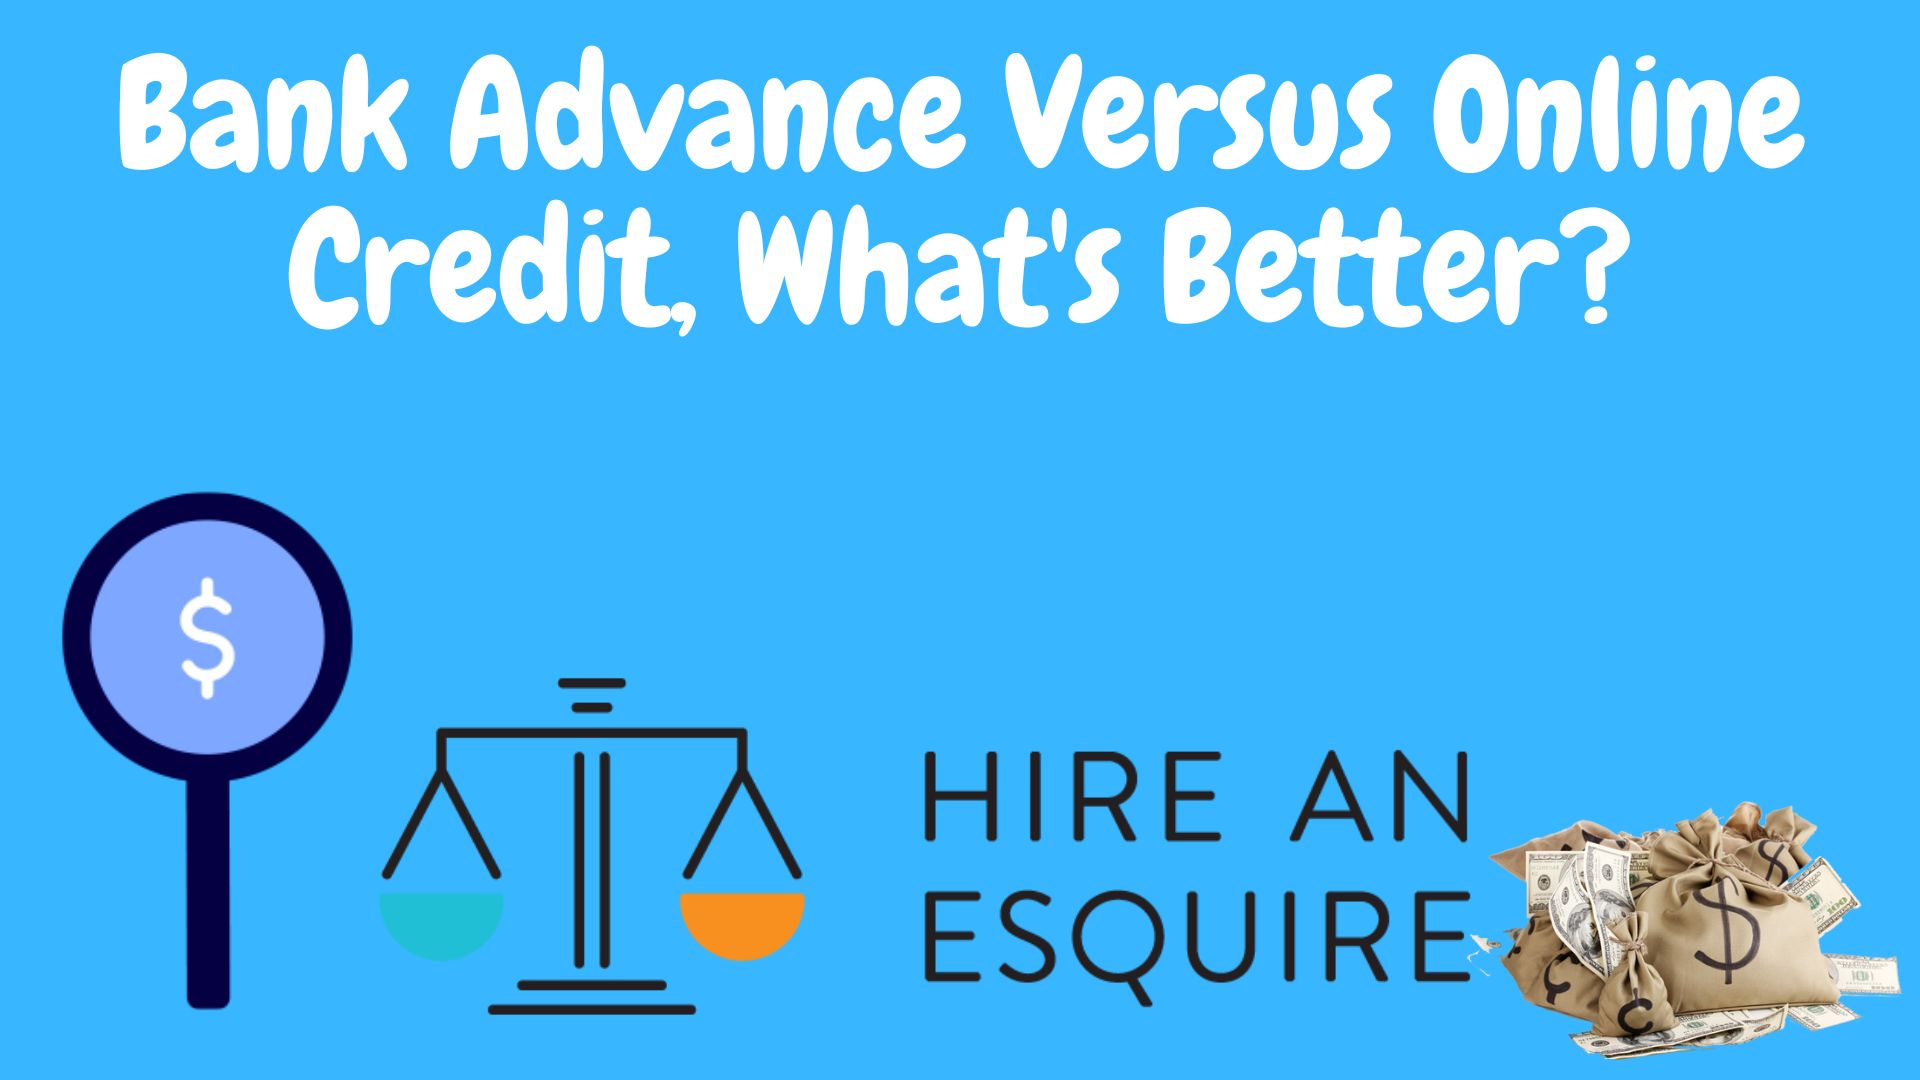 Bank Advance Versus Online Credit, What's Better?